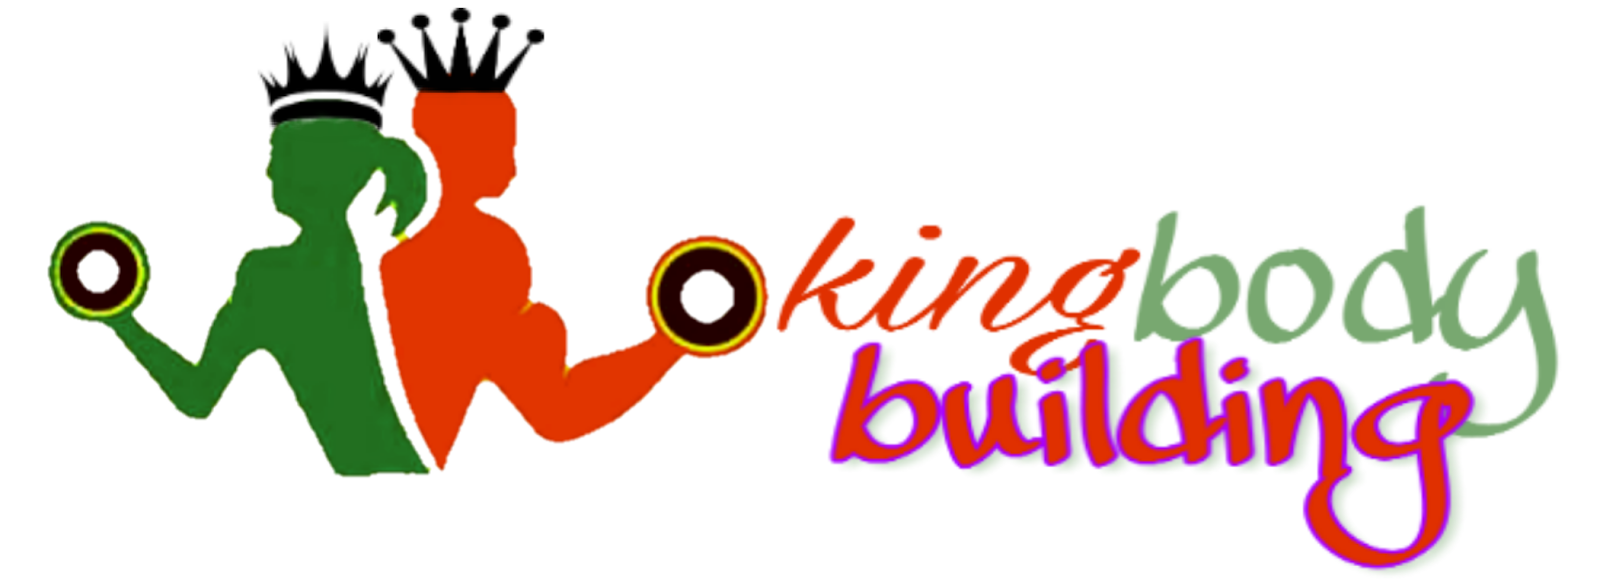 KingBodyBuilding